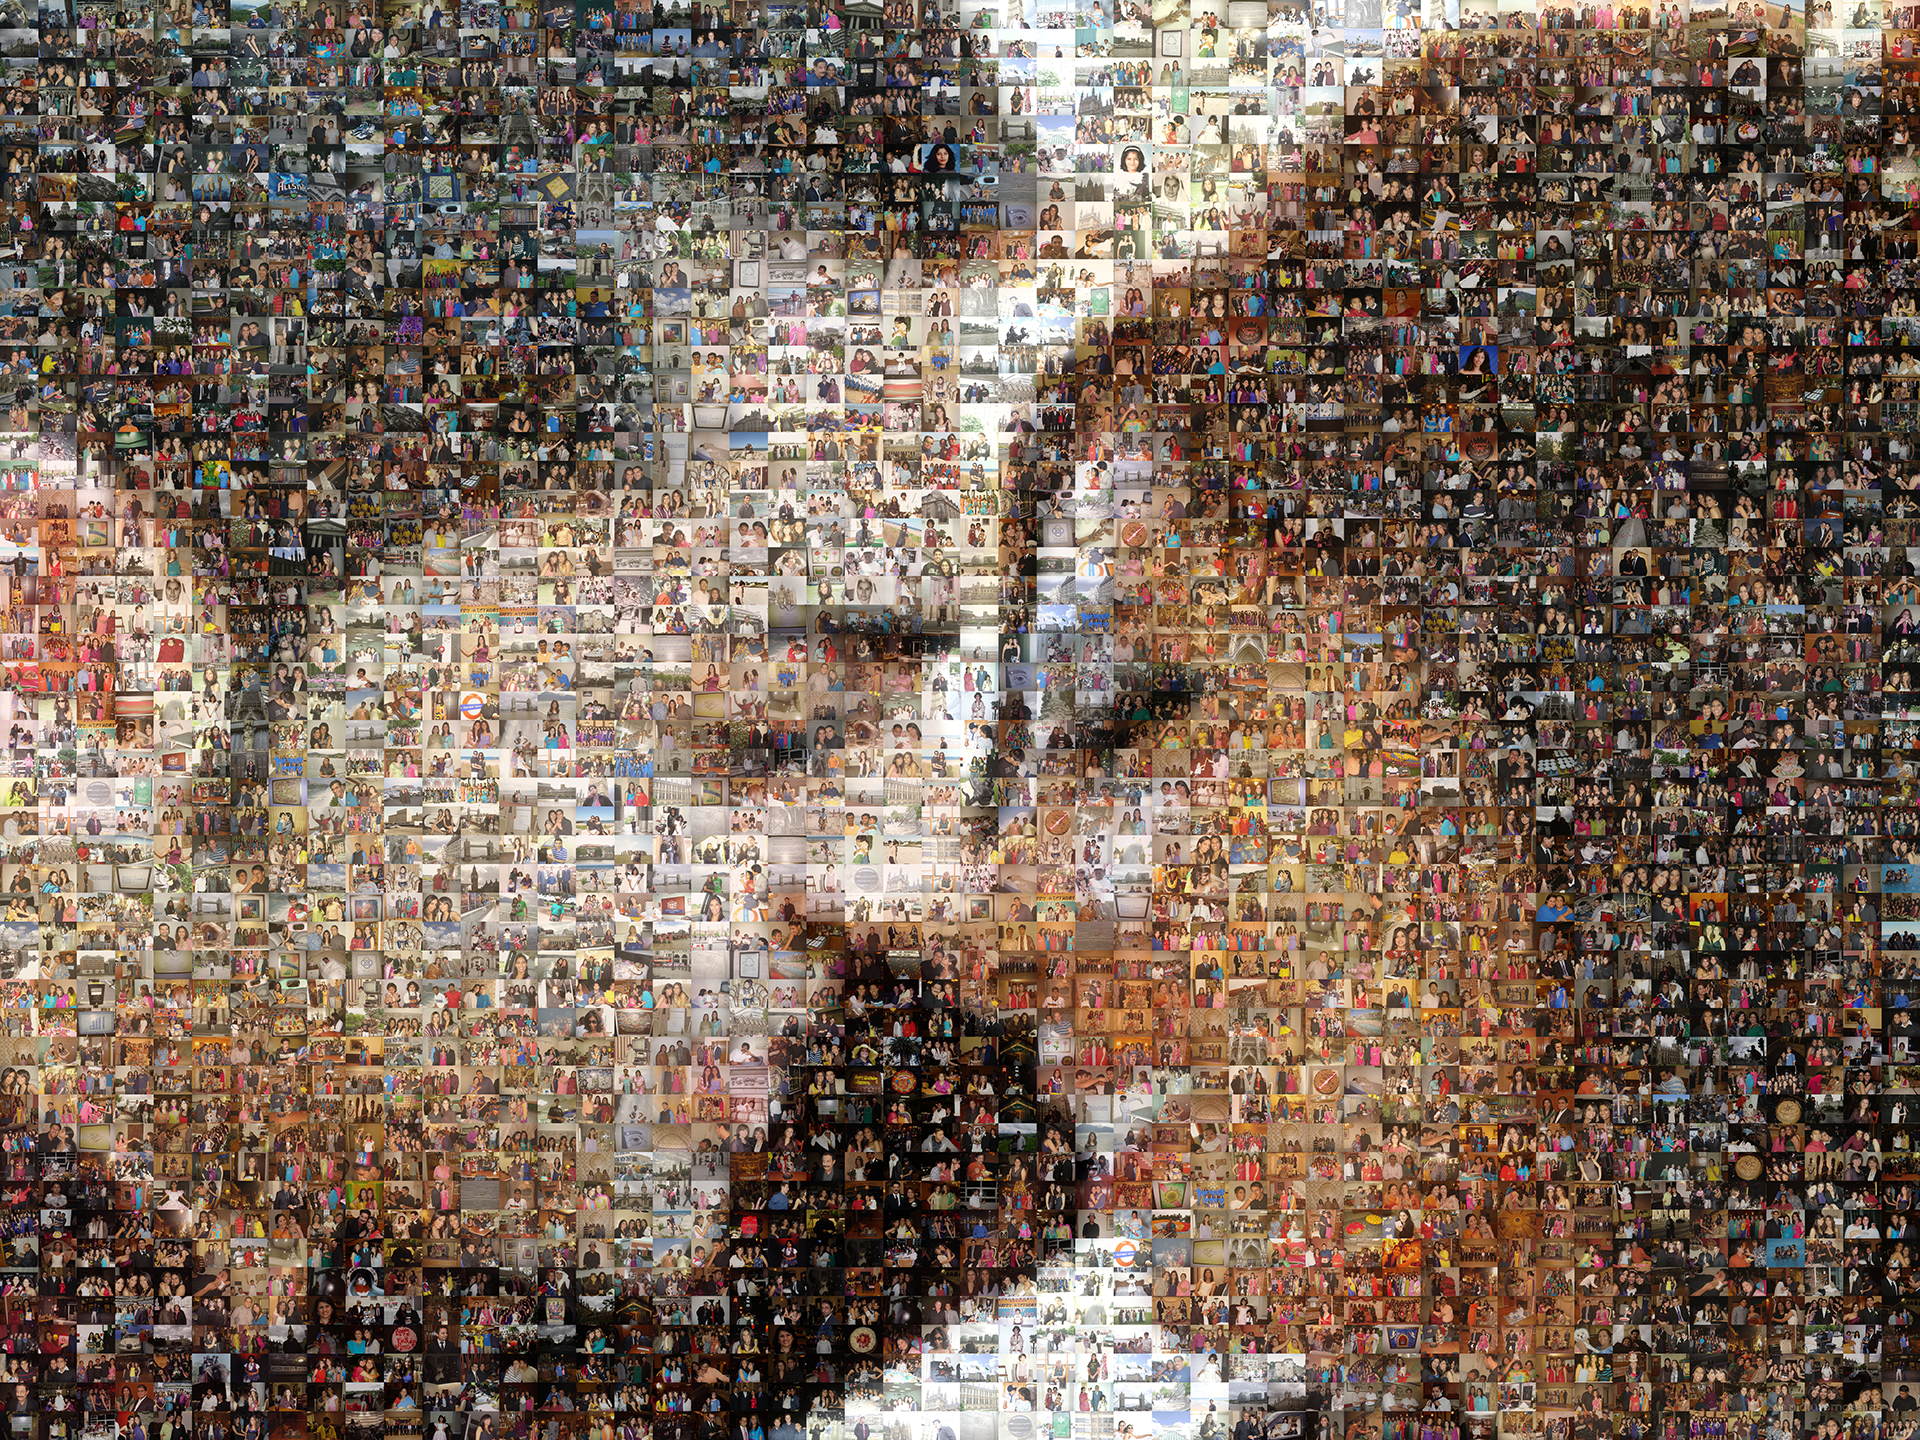 photo mosaic created using over 1,600 customer selected photos